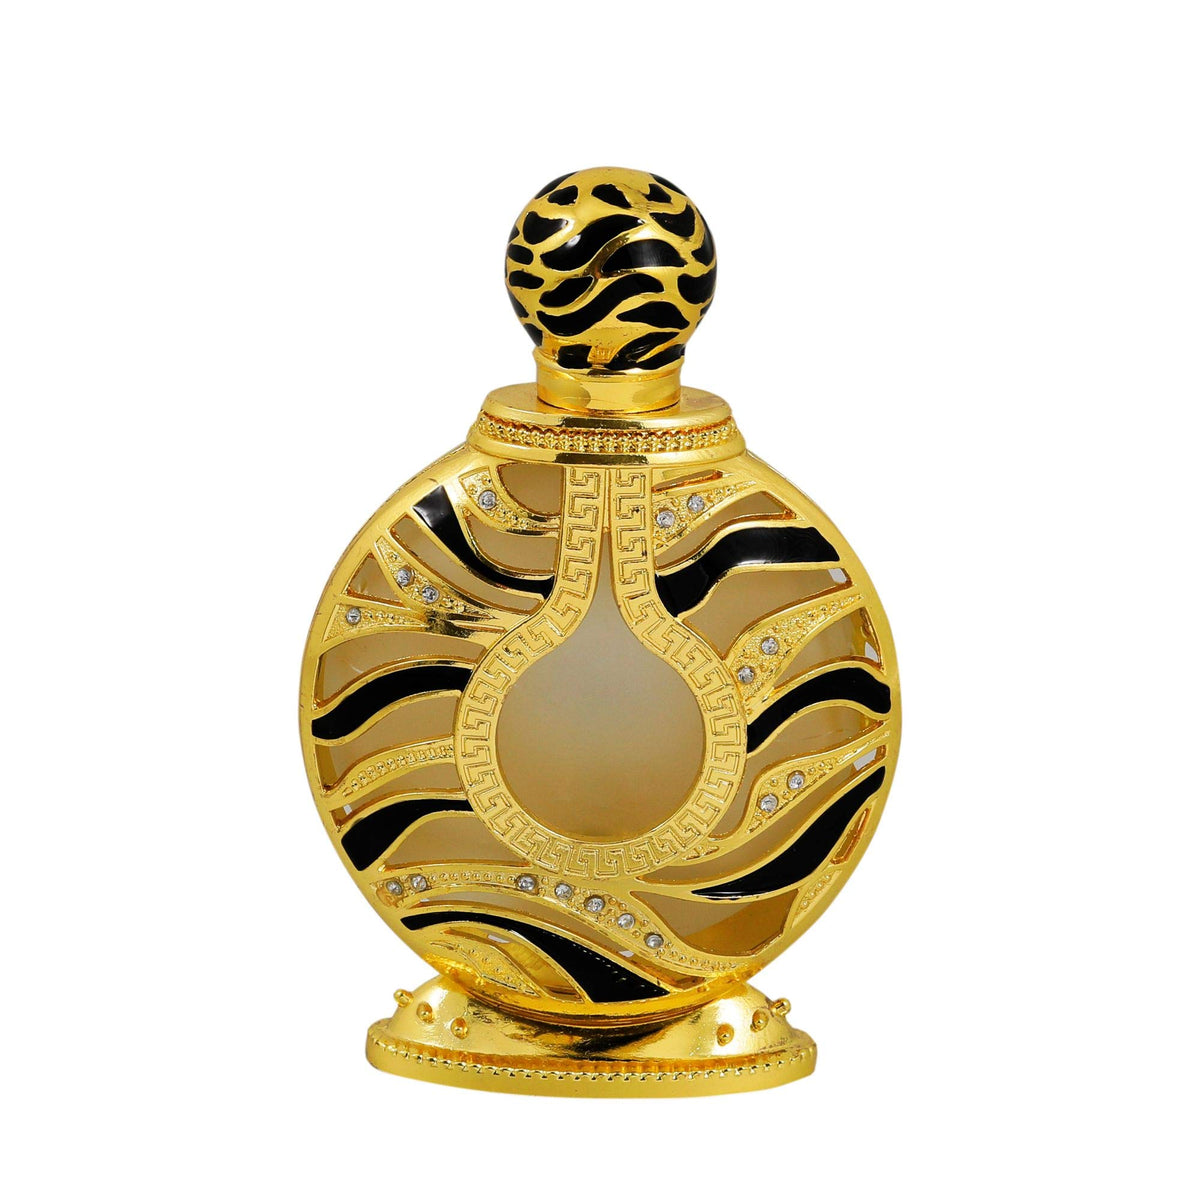 Safari Gold  Khadlaj Concentrated Perfume Oil 20Ml Unisex